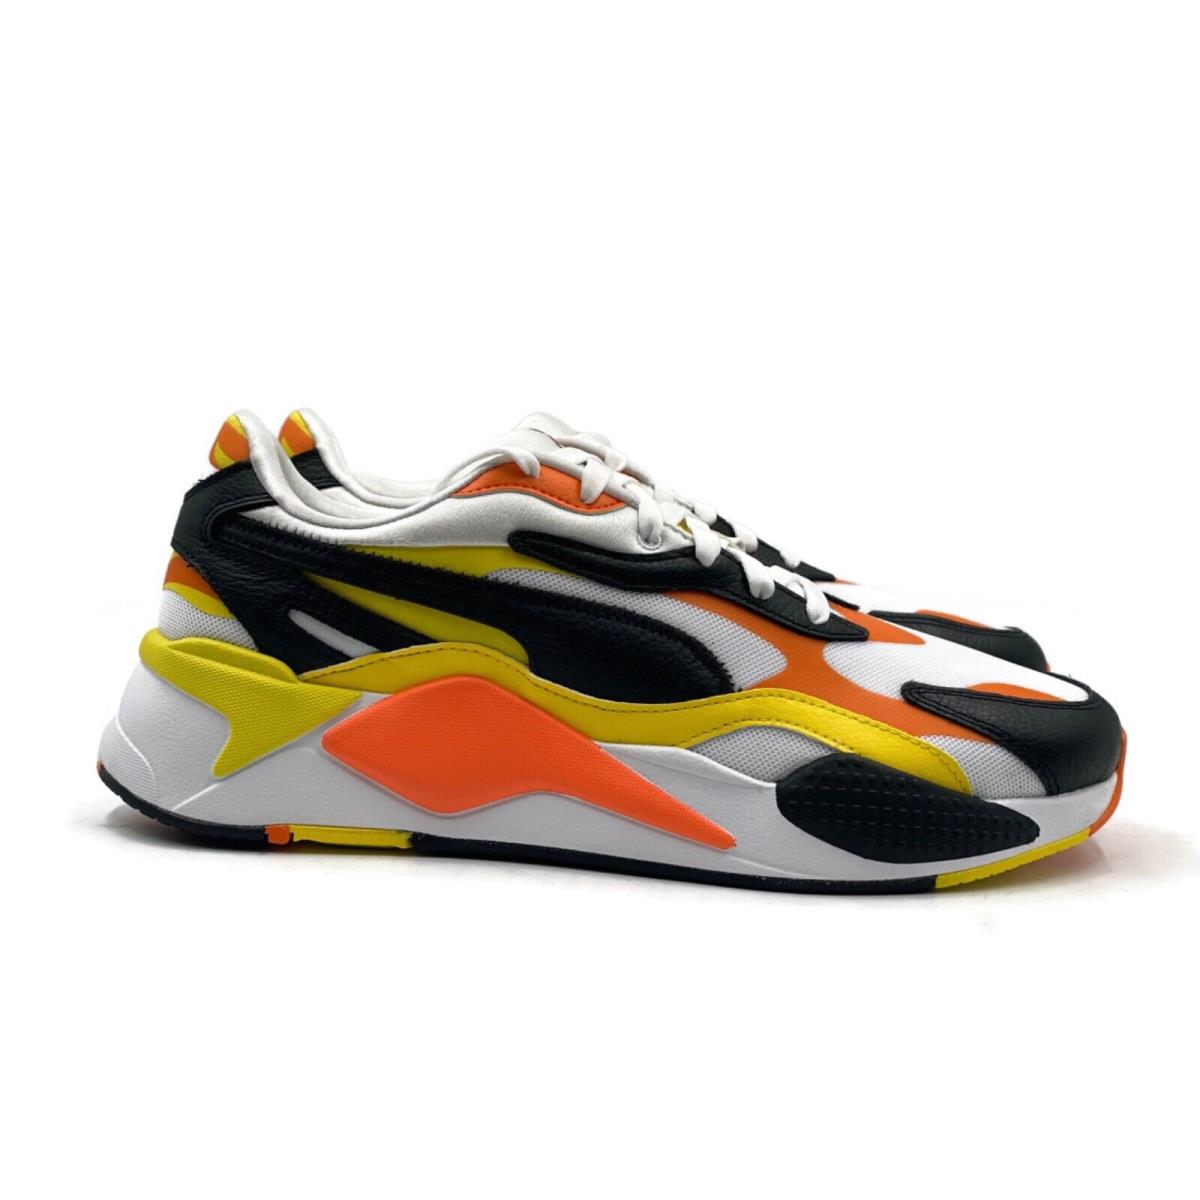 Puma RS-X3 59th Mens Sz 10.5 Casual Running Shoe Orange Black Trainer Sneaker